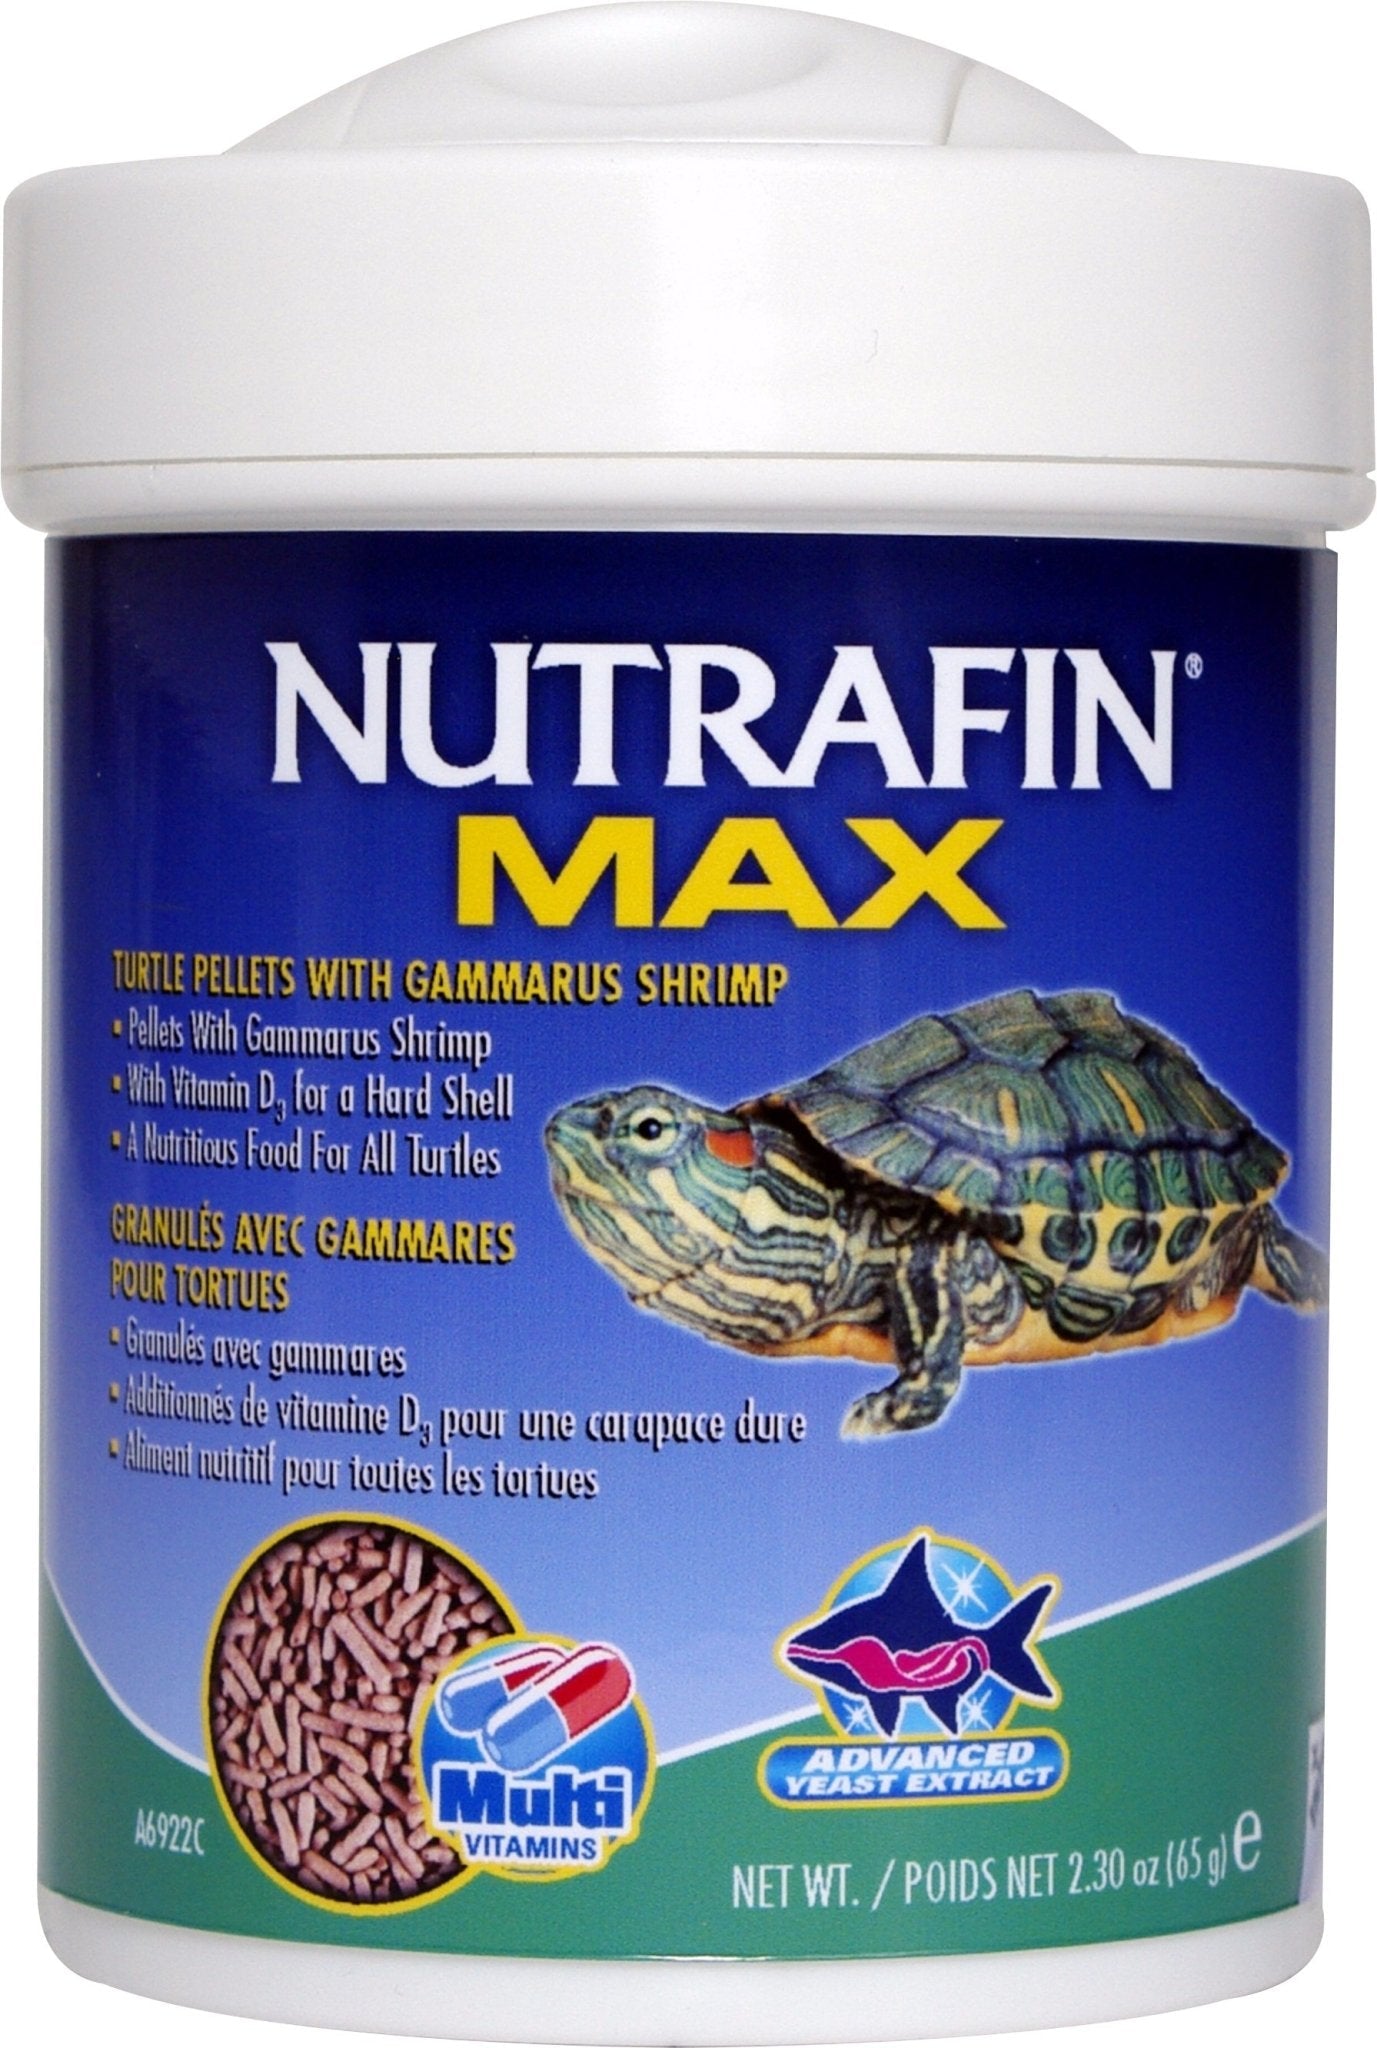 Nutrafin Max Turtle Pellets Gammarus Shrimp - Woonona Petfood & Produce